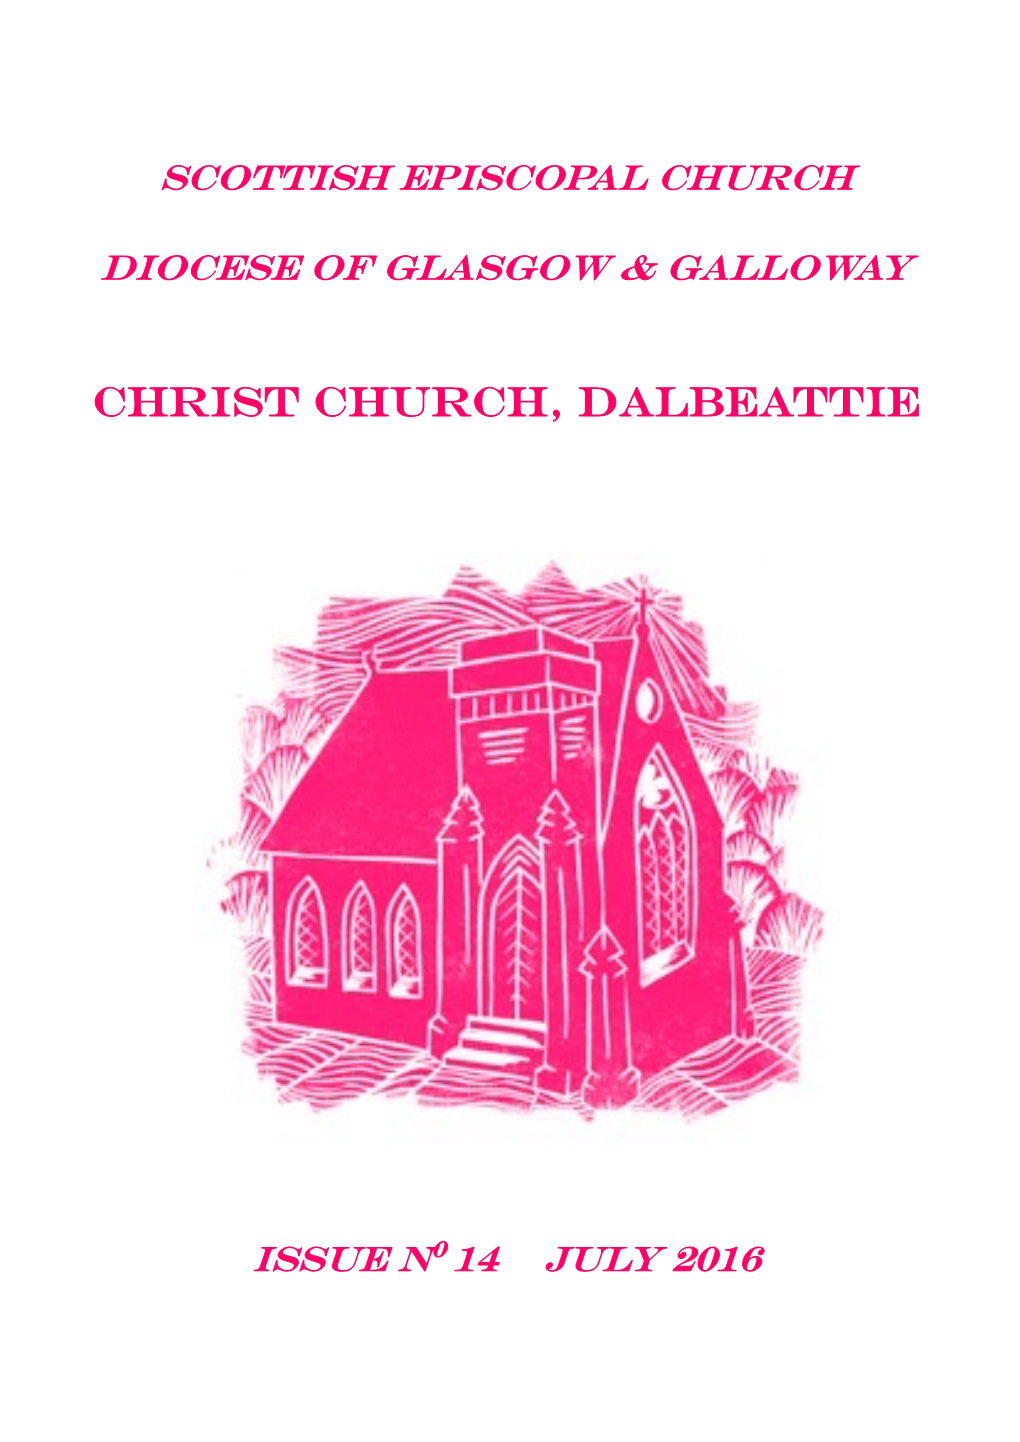 Christ Church, Dalbeattie